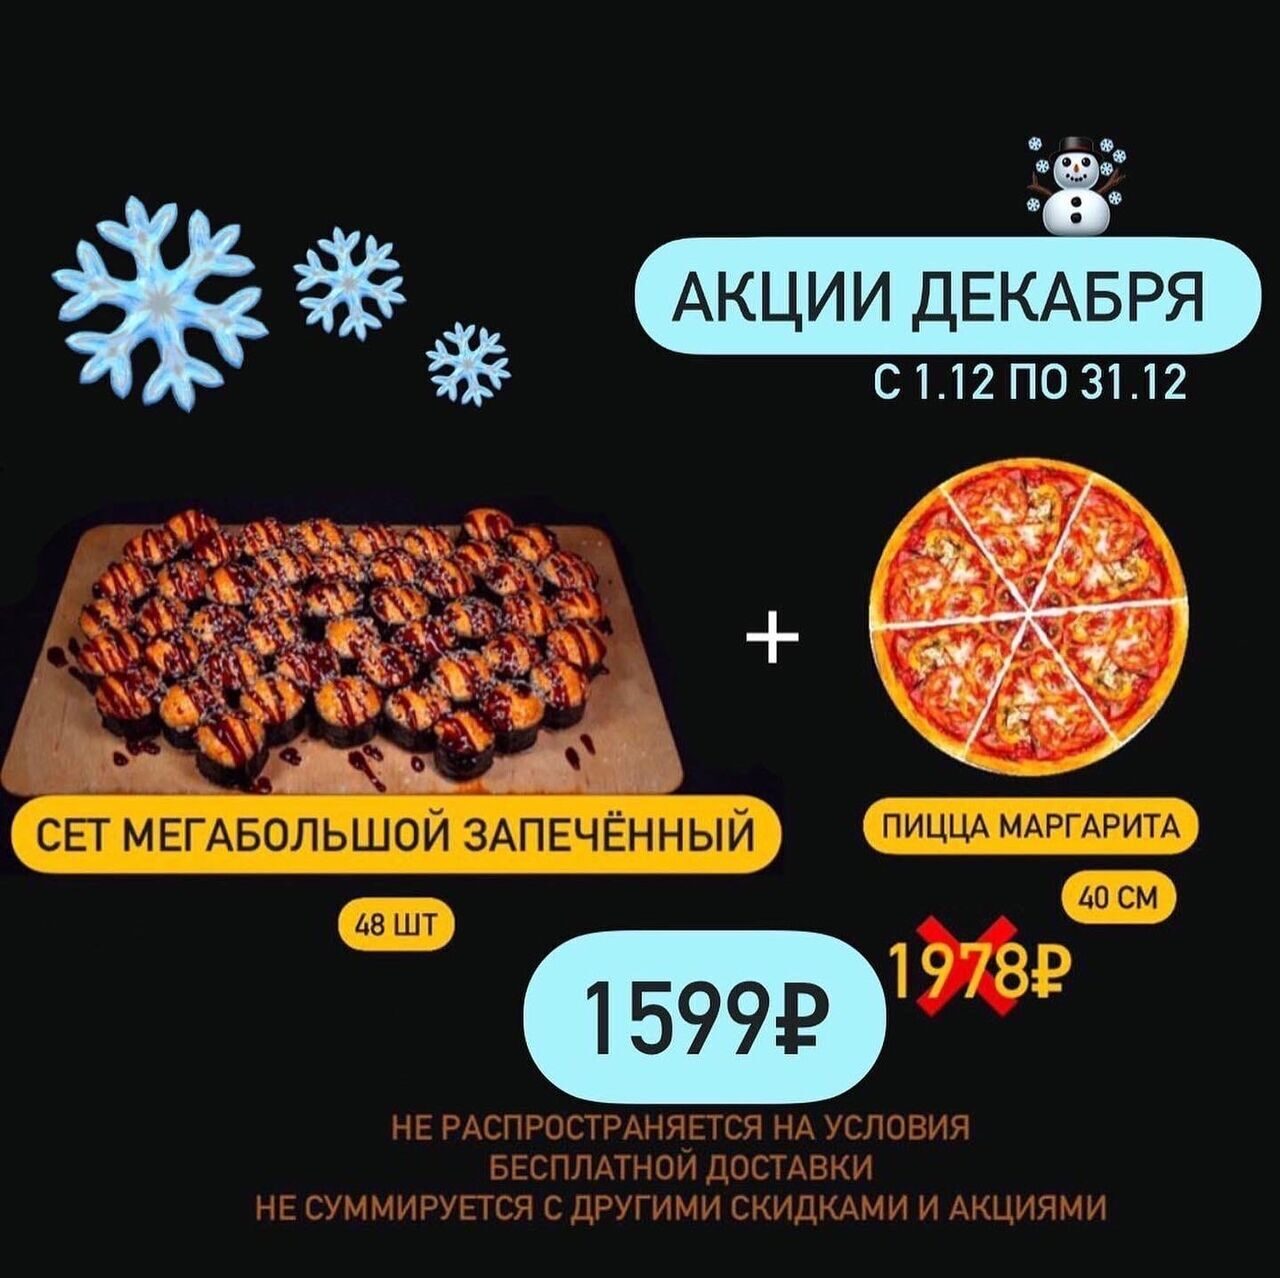 технологическая карта пицца маргарита 40 см фото 95